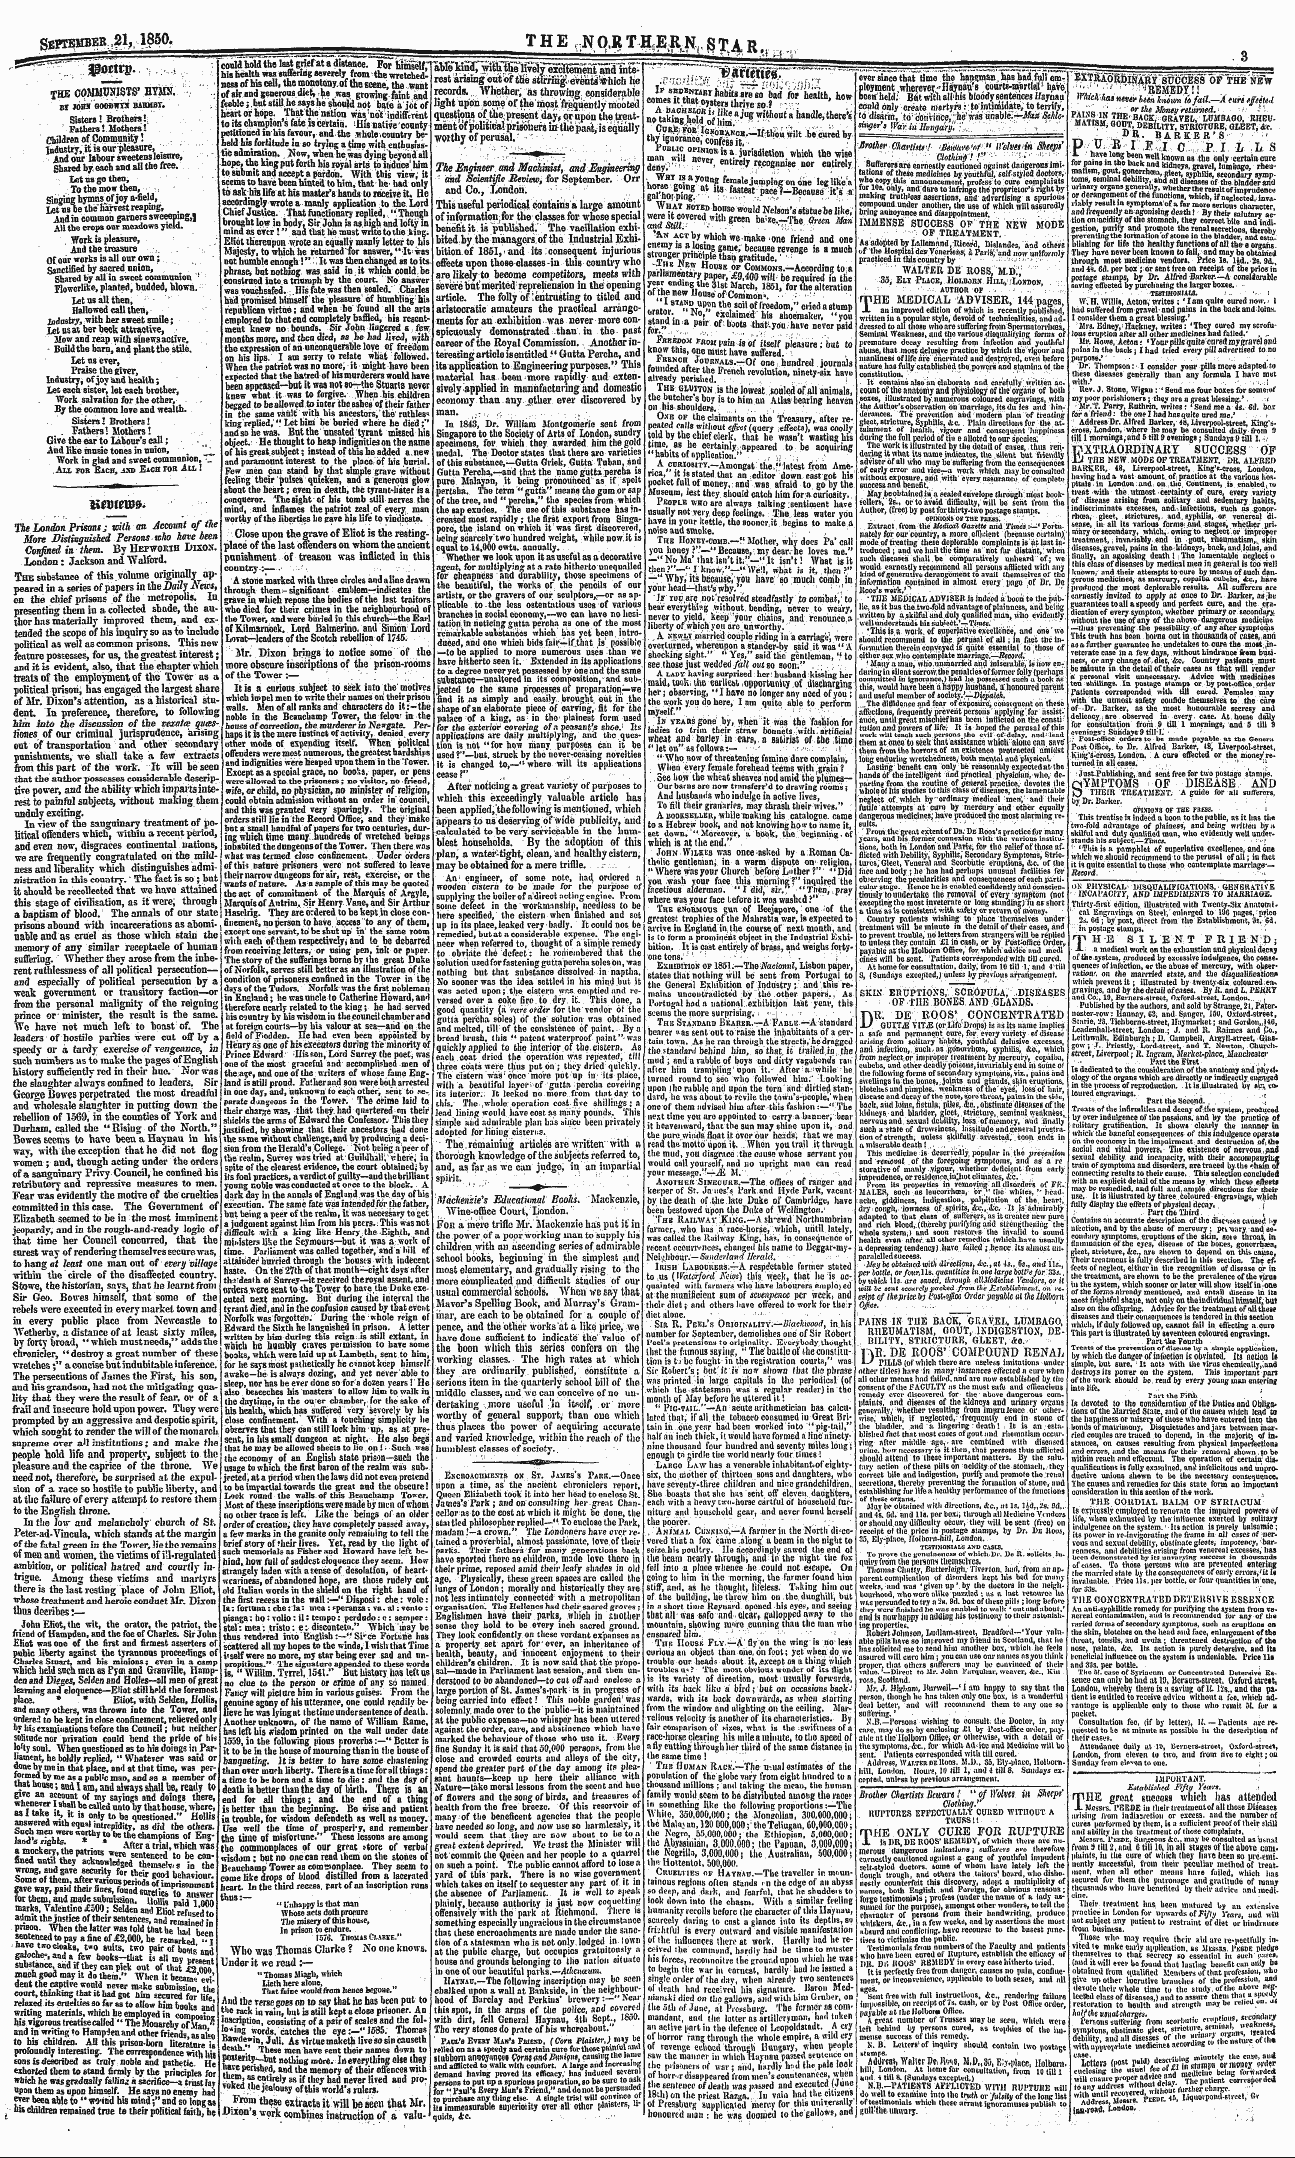 Northern Star (1837-1852): jS F Y, 3rd edition - Ad00316